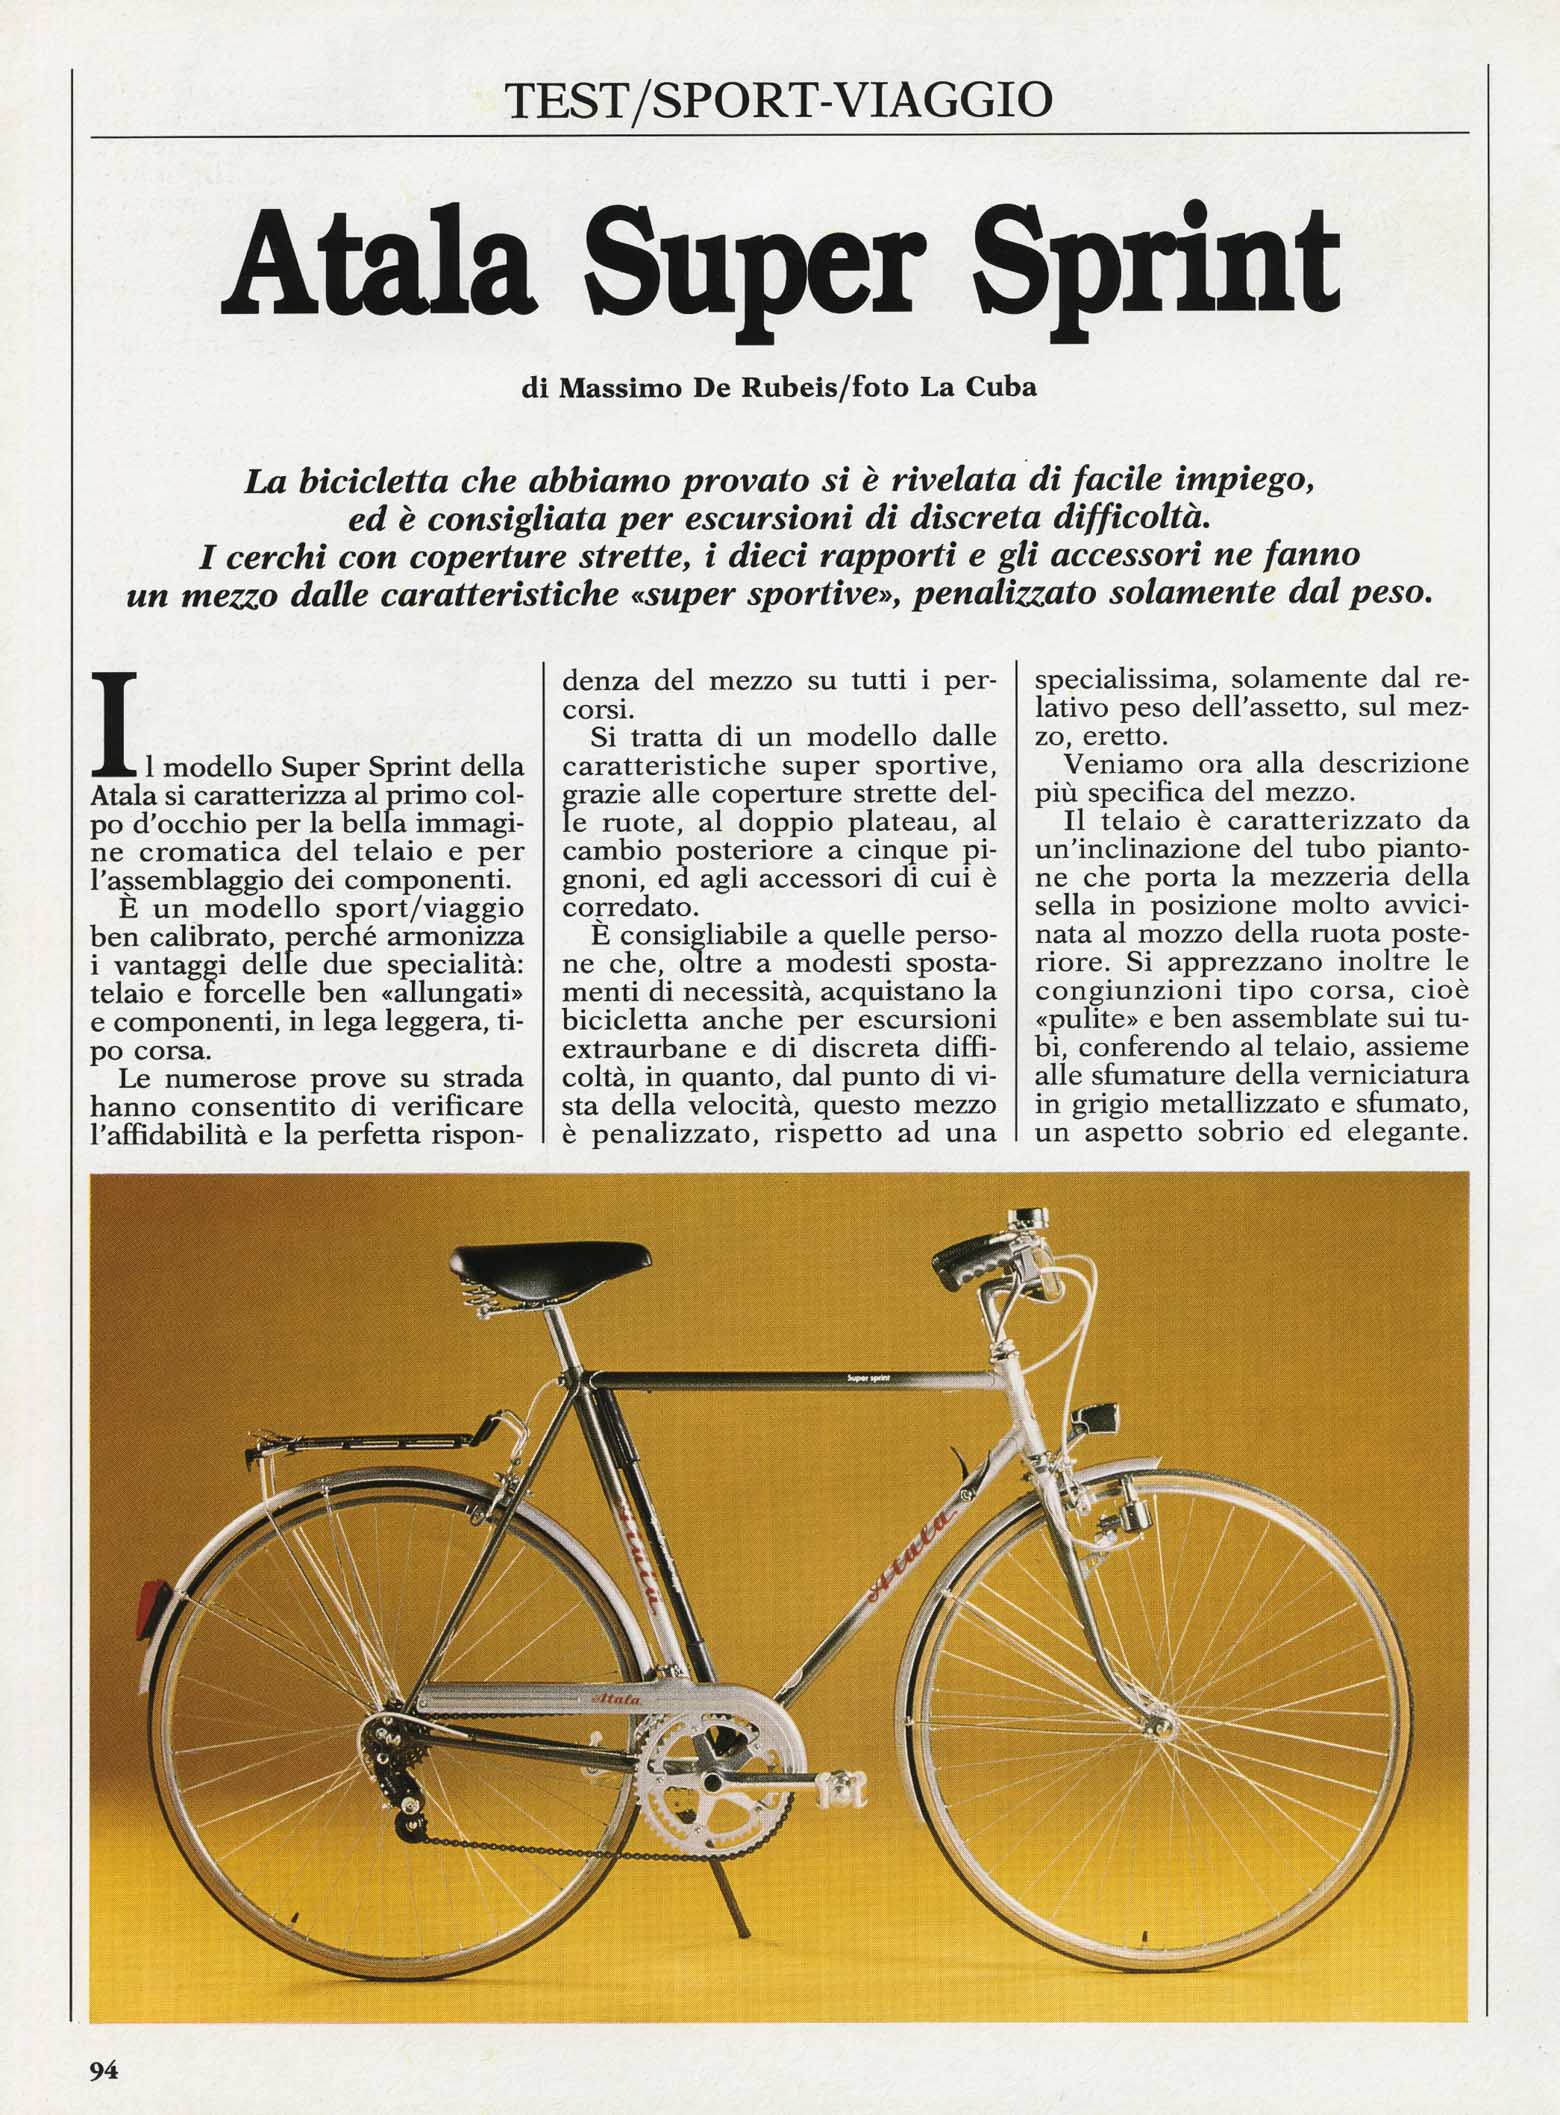 La Bicicletta 1988 July - Atala Super Sprint scan 01 main image